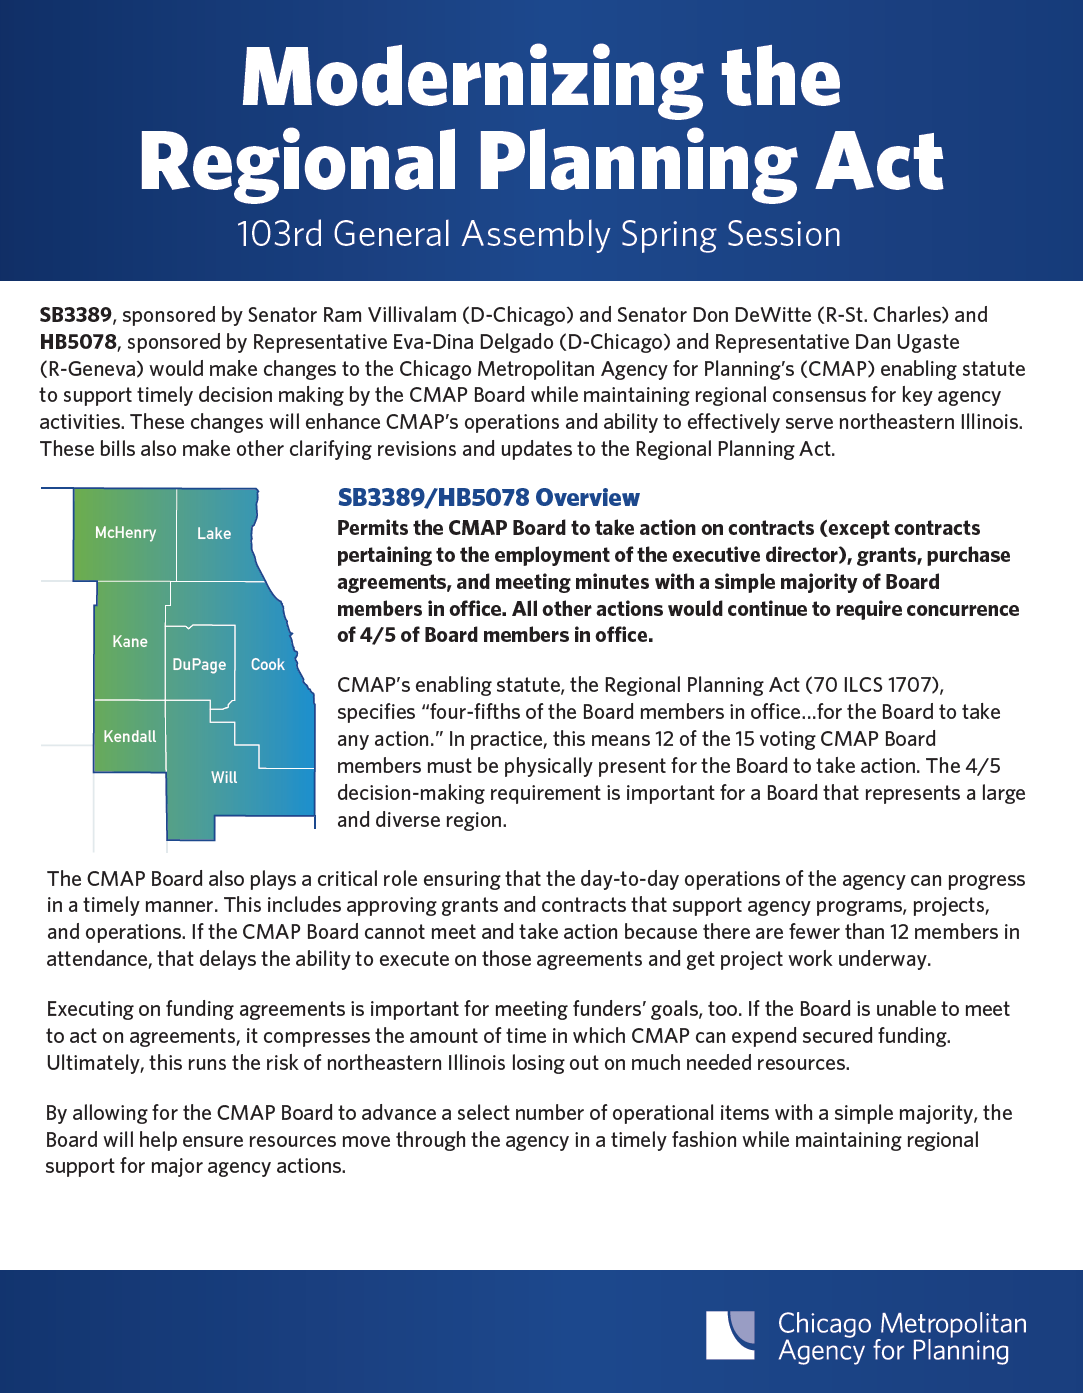 The Illinois Regional Planning Act Funding flyer